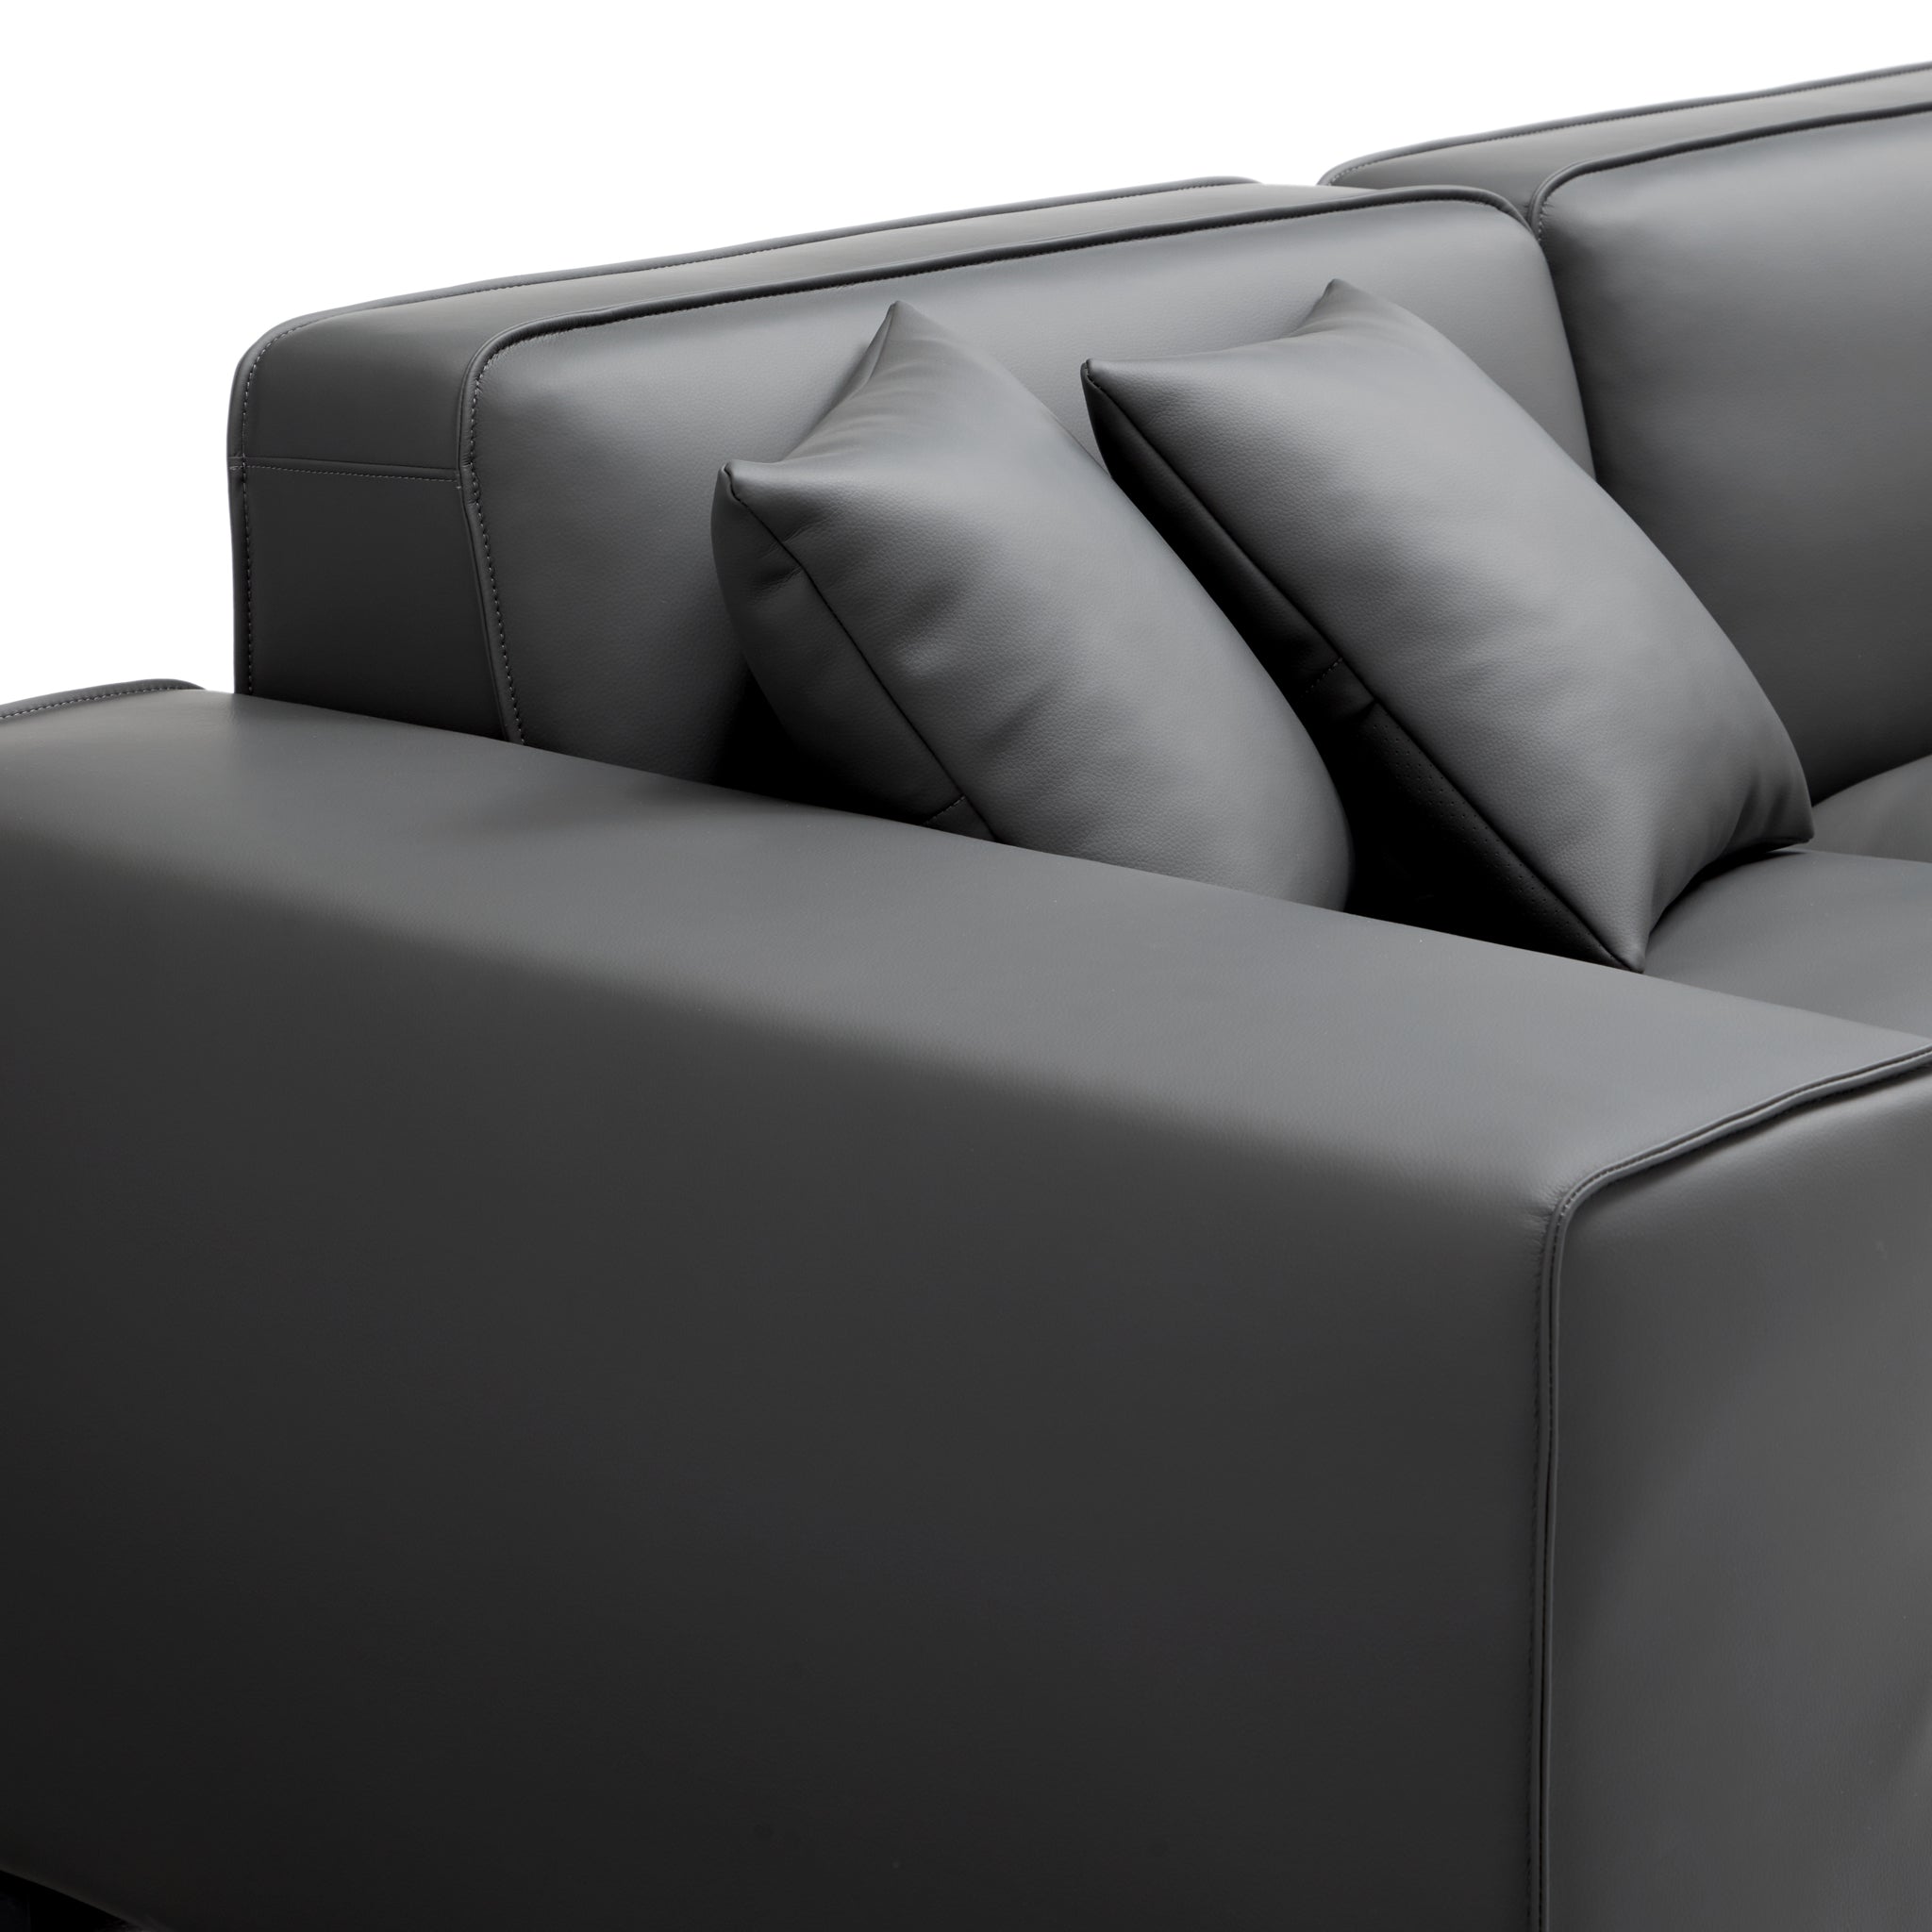 Domus Modular Dark Gray Leather U-Shaped Sectional Sofa